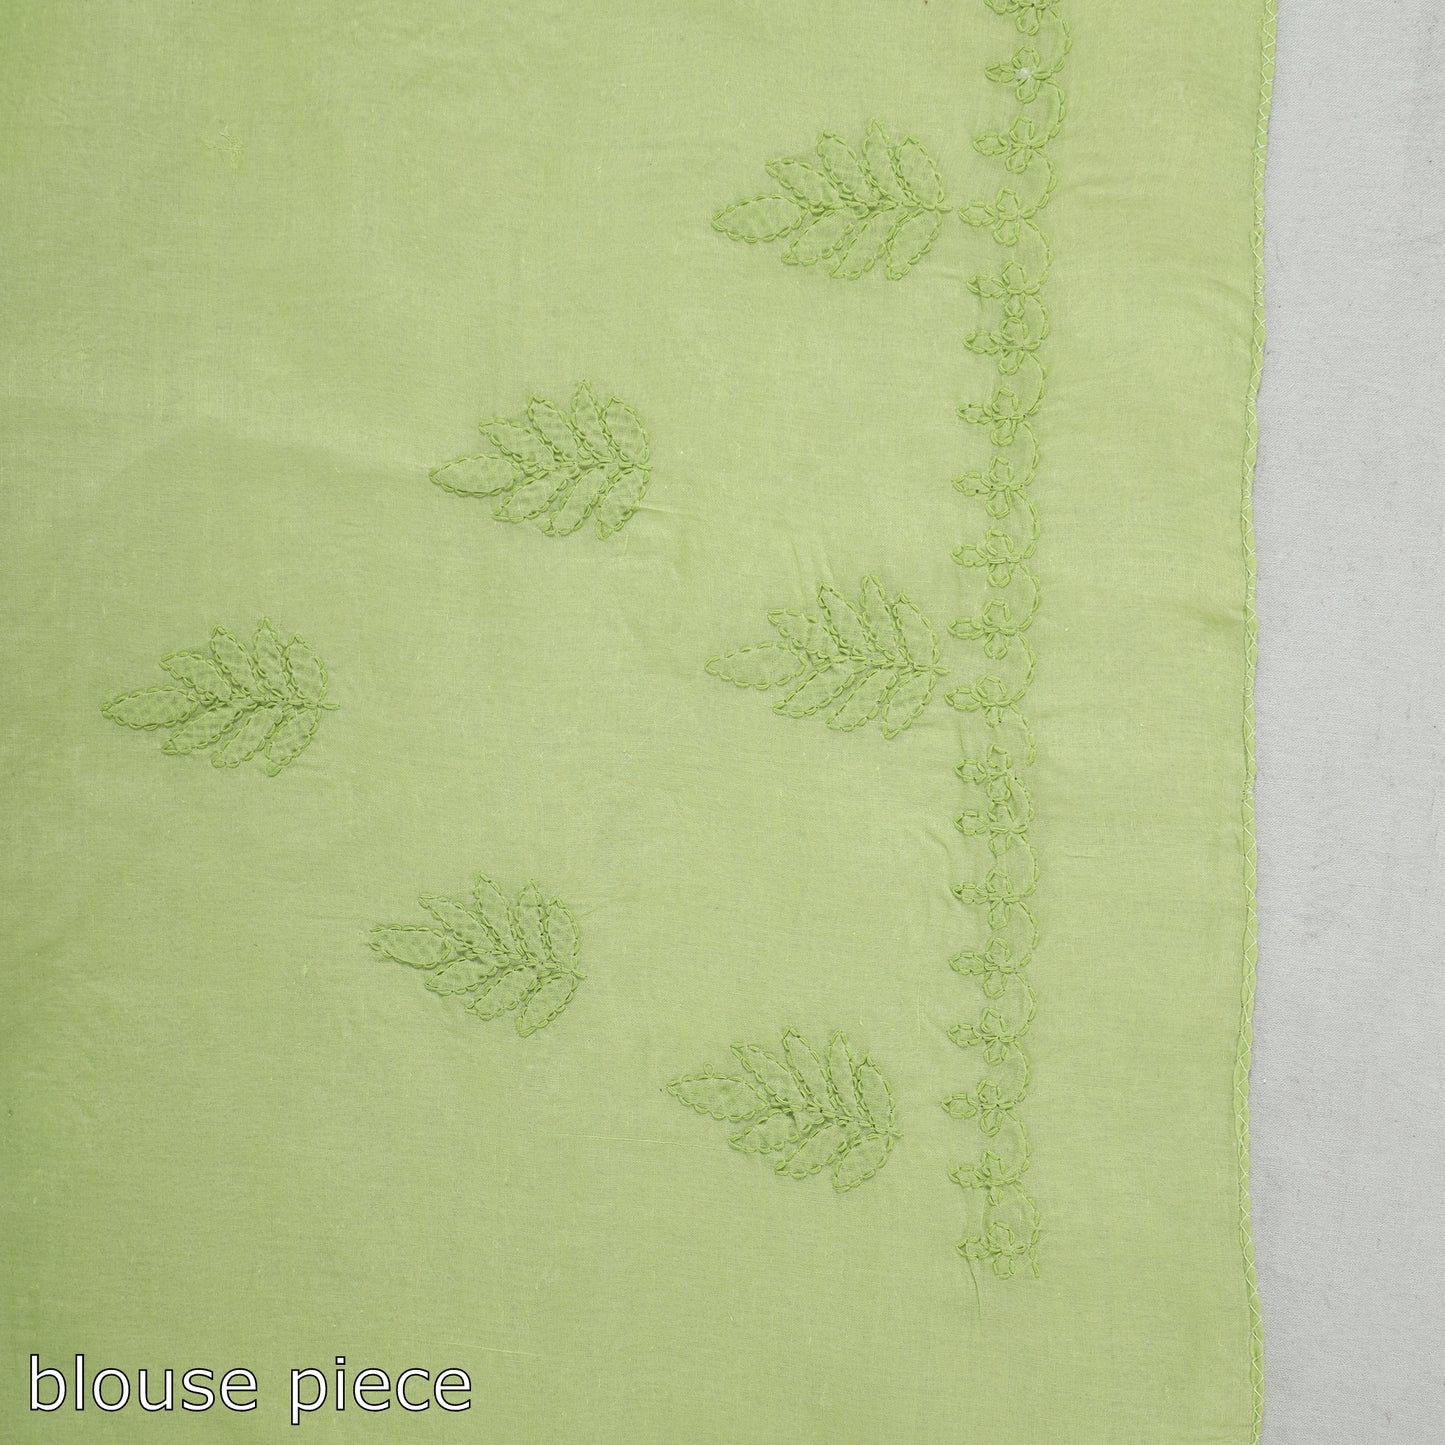 Green - Lucknow Chikankari Hand Embroidery Terivoile Cotton Saree 09